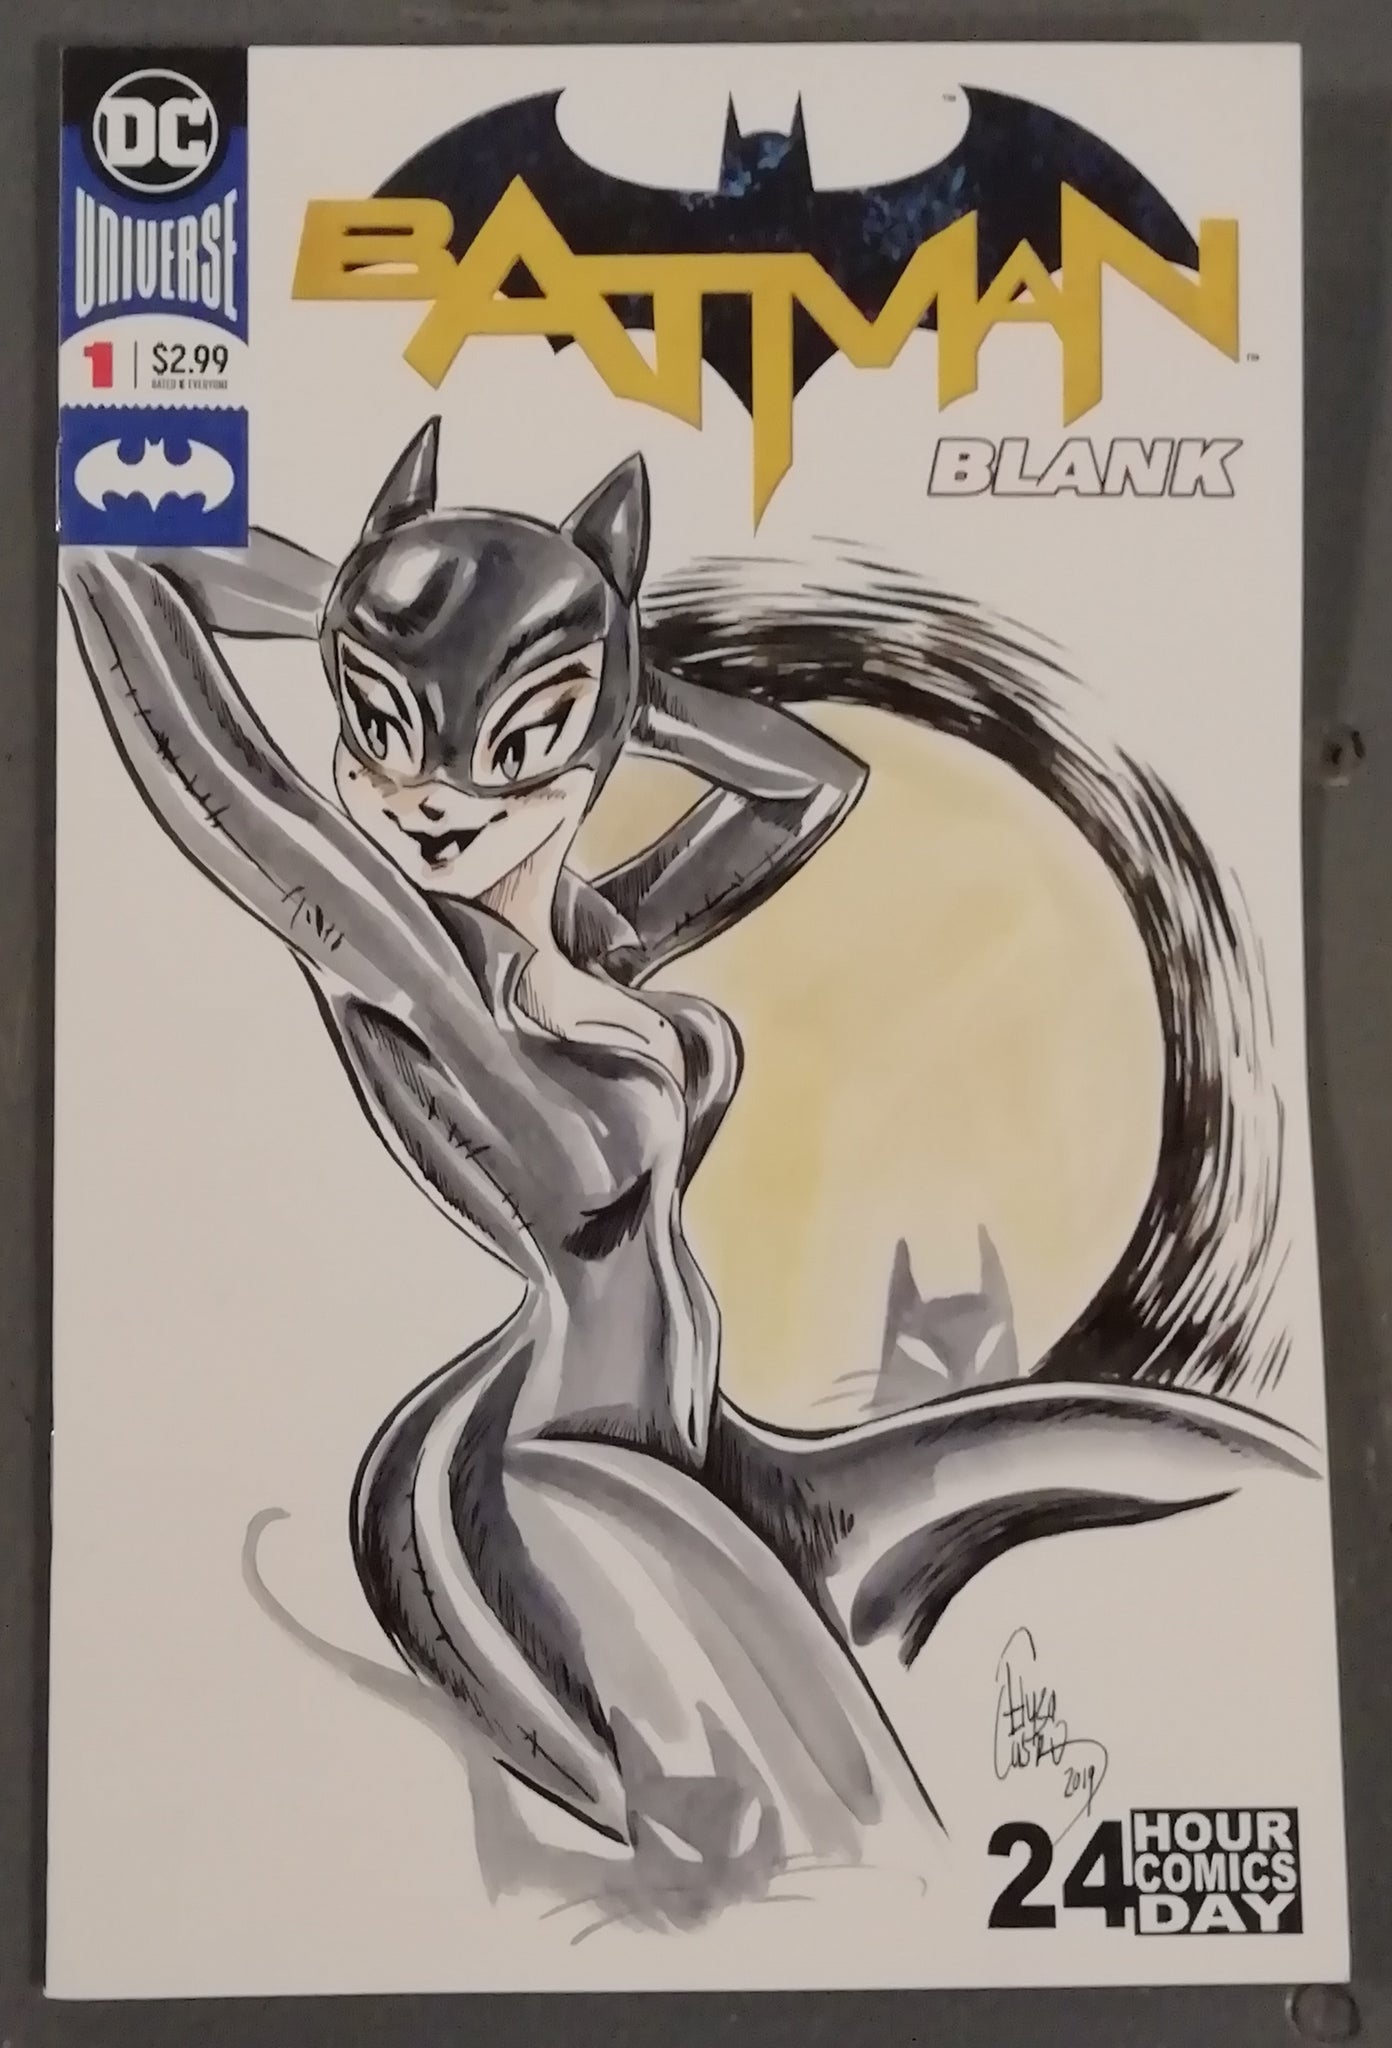 Batman #1 "Catwoman" Original Art Cover by Elysa Castro